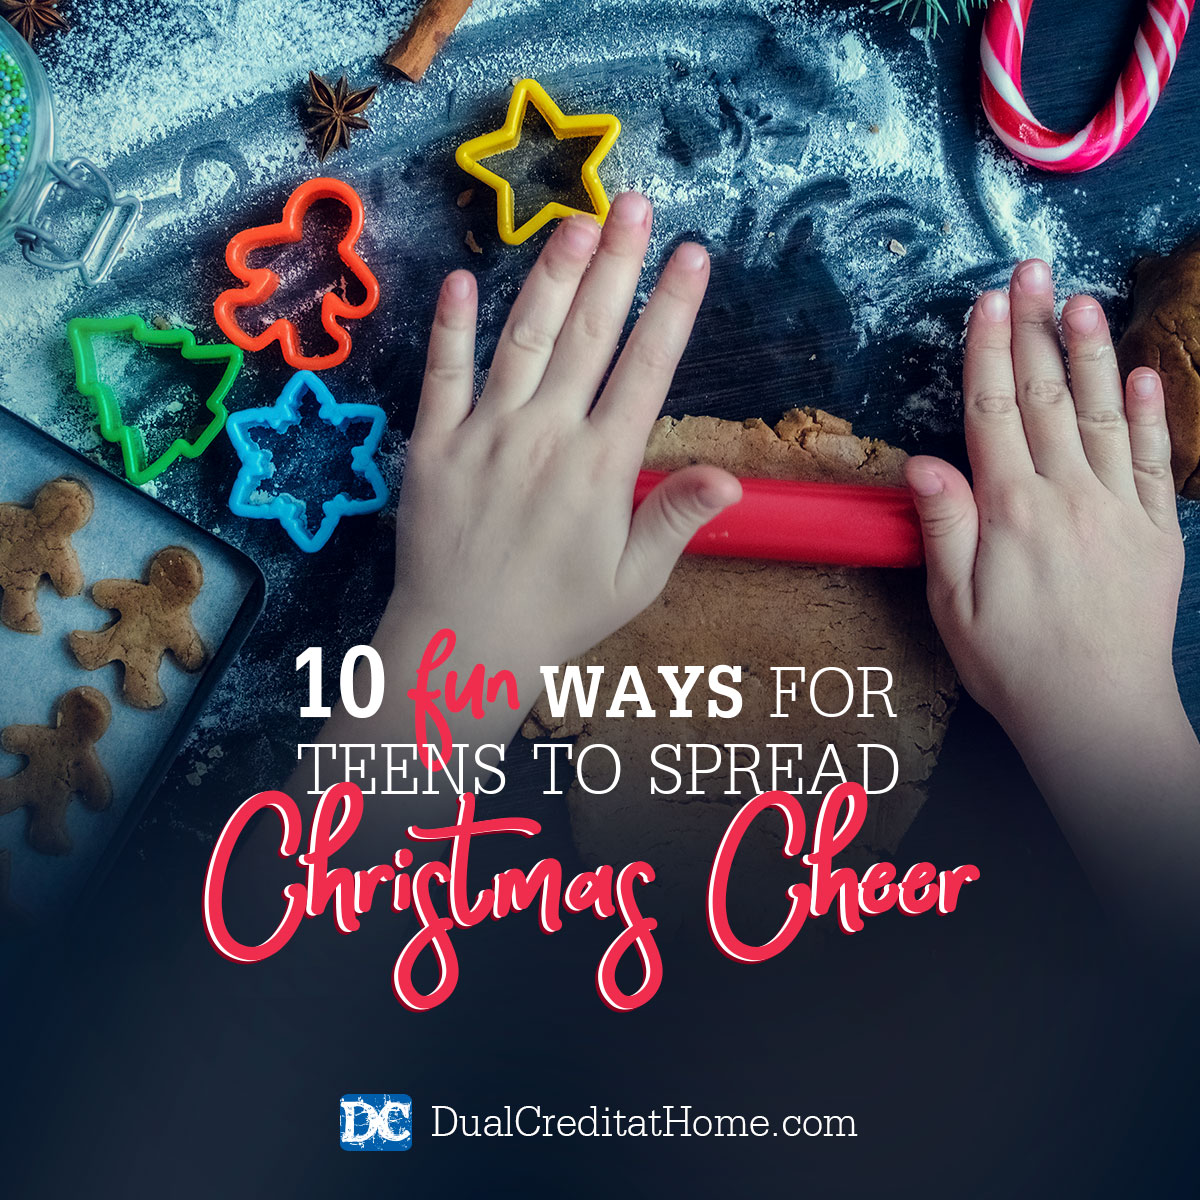 10 Fun Ways for Teens to Spread Christmas Cheer